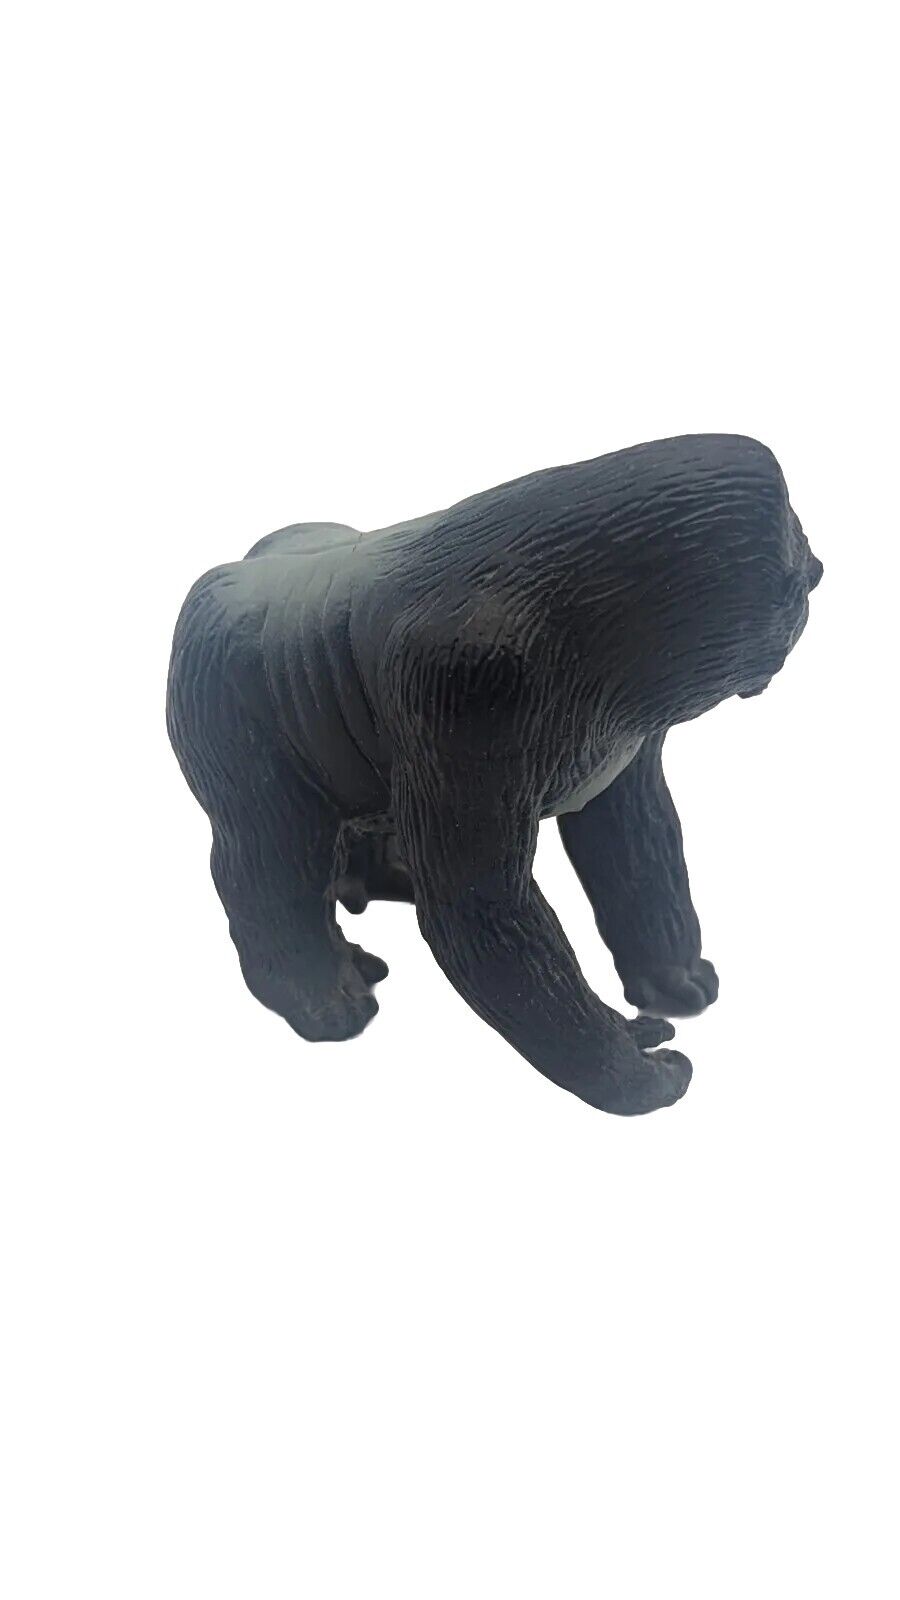 Gorilla 1996 Safari LTD Figure Toy Collectable Animal Black & Grey Vintage